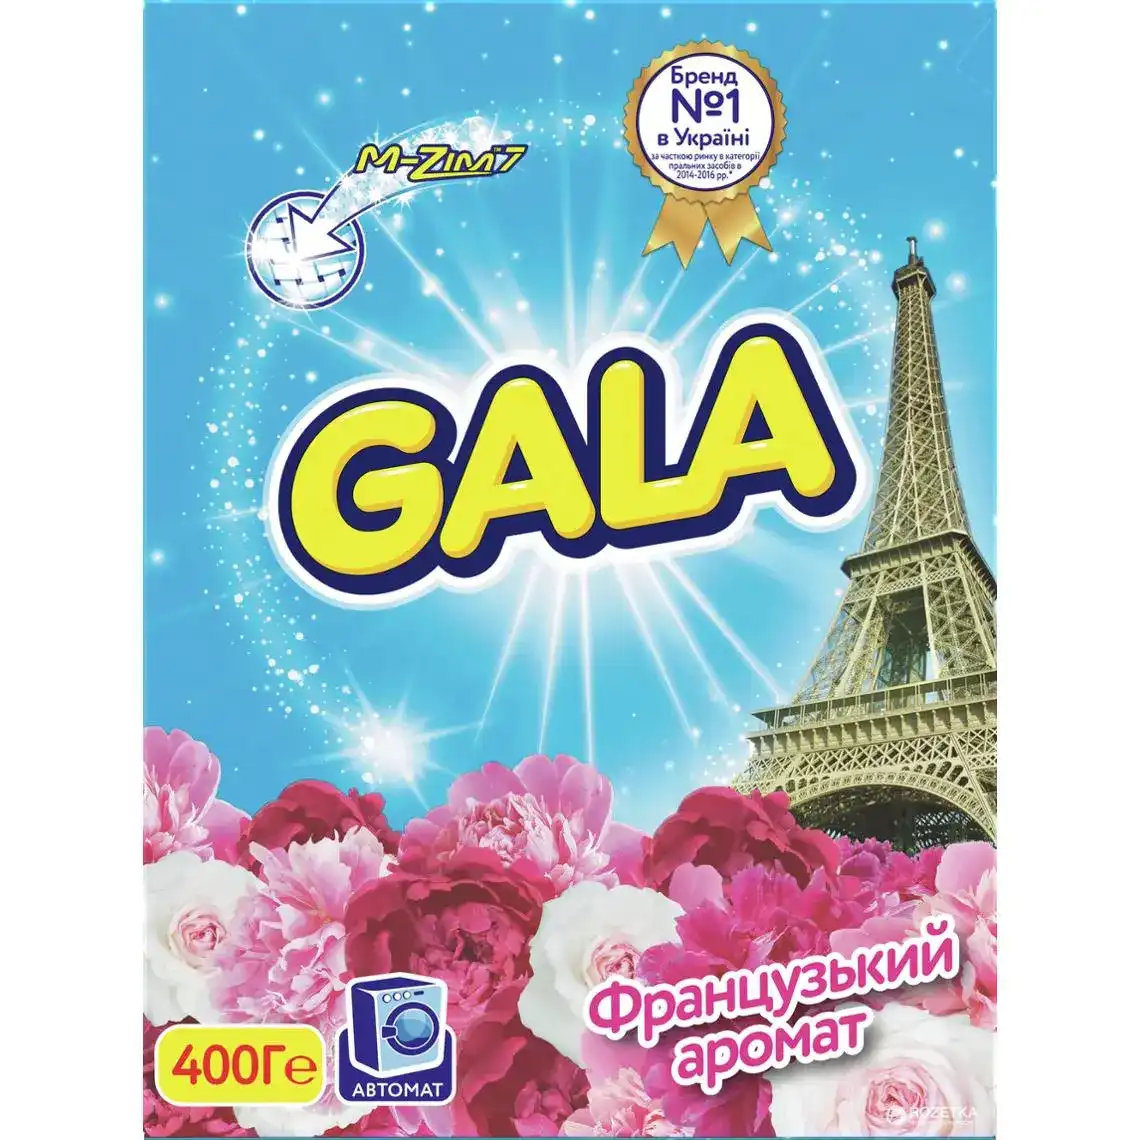 Пральний порошок Gala automat 2в1 Французький аромат 400 г